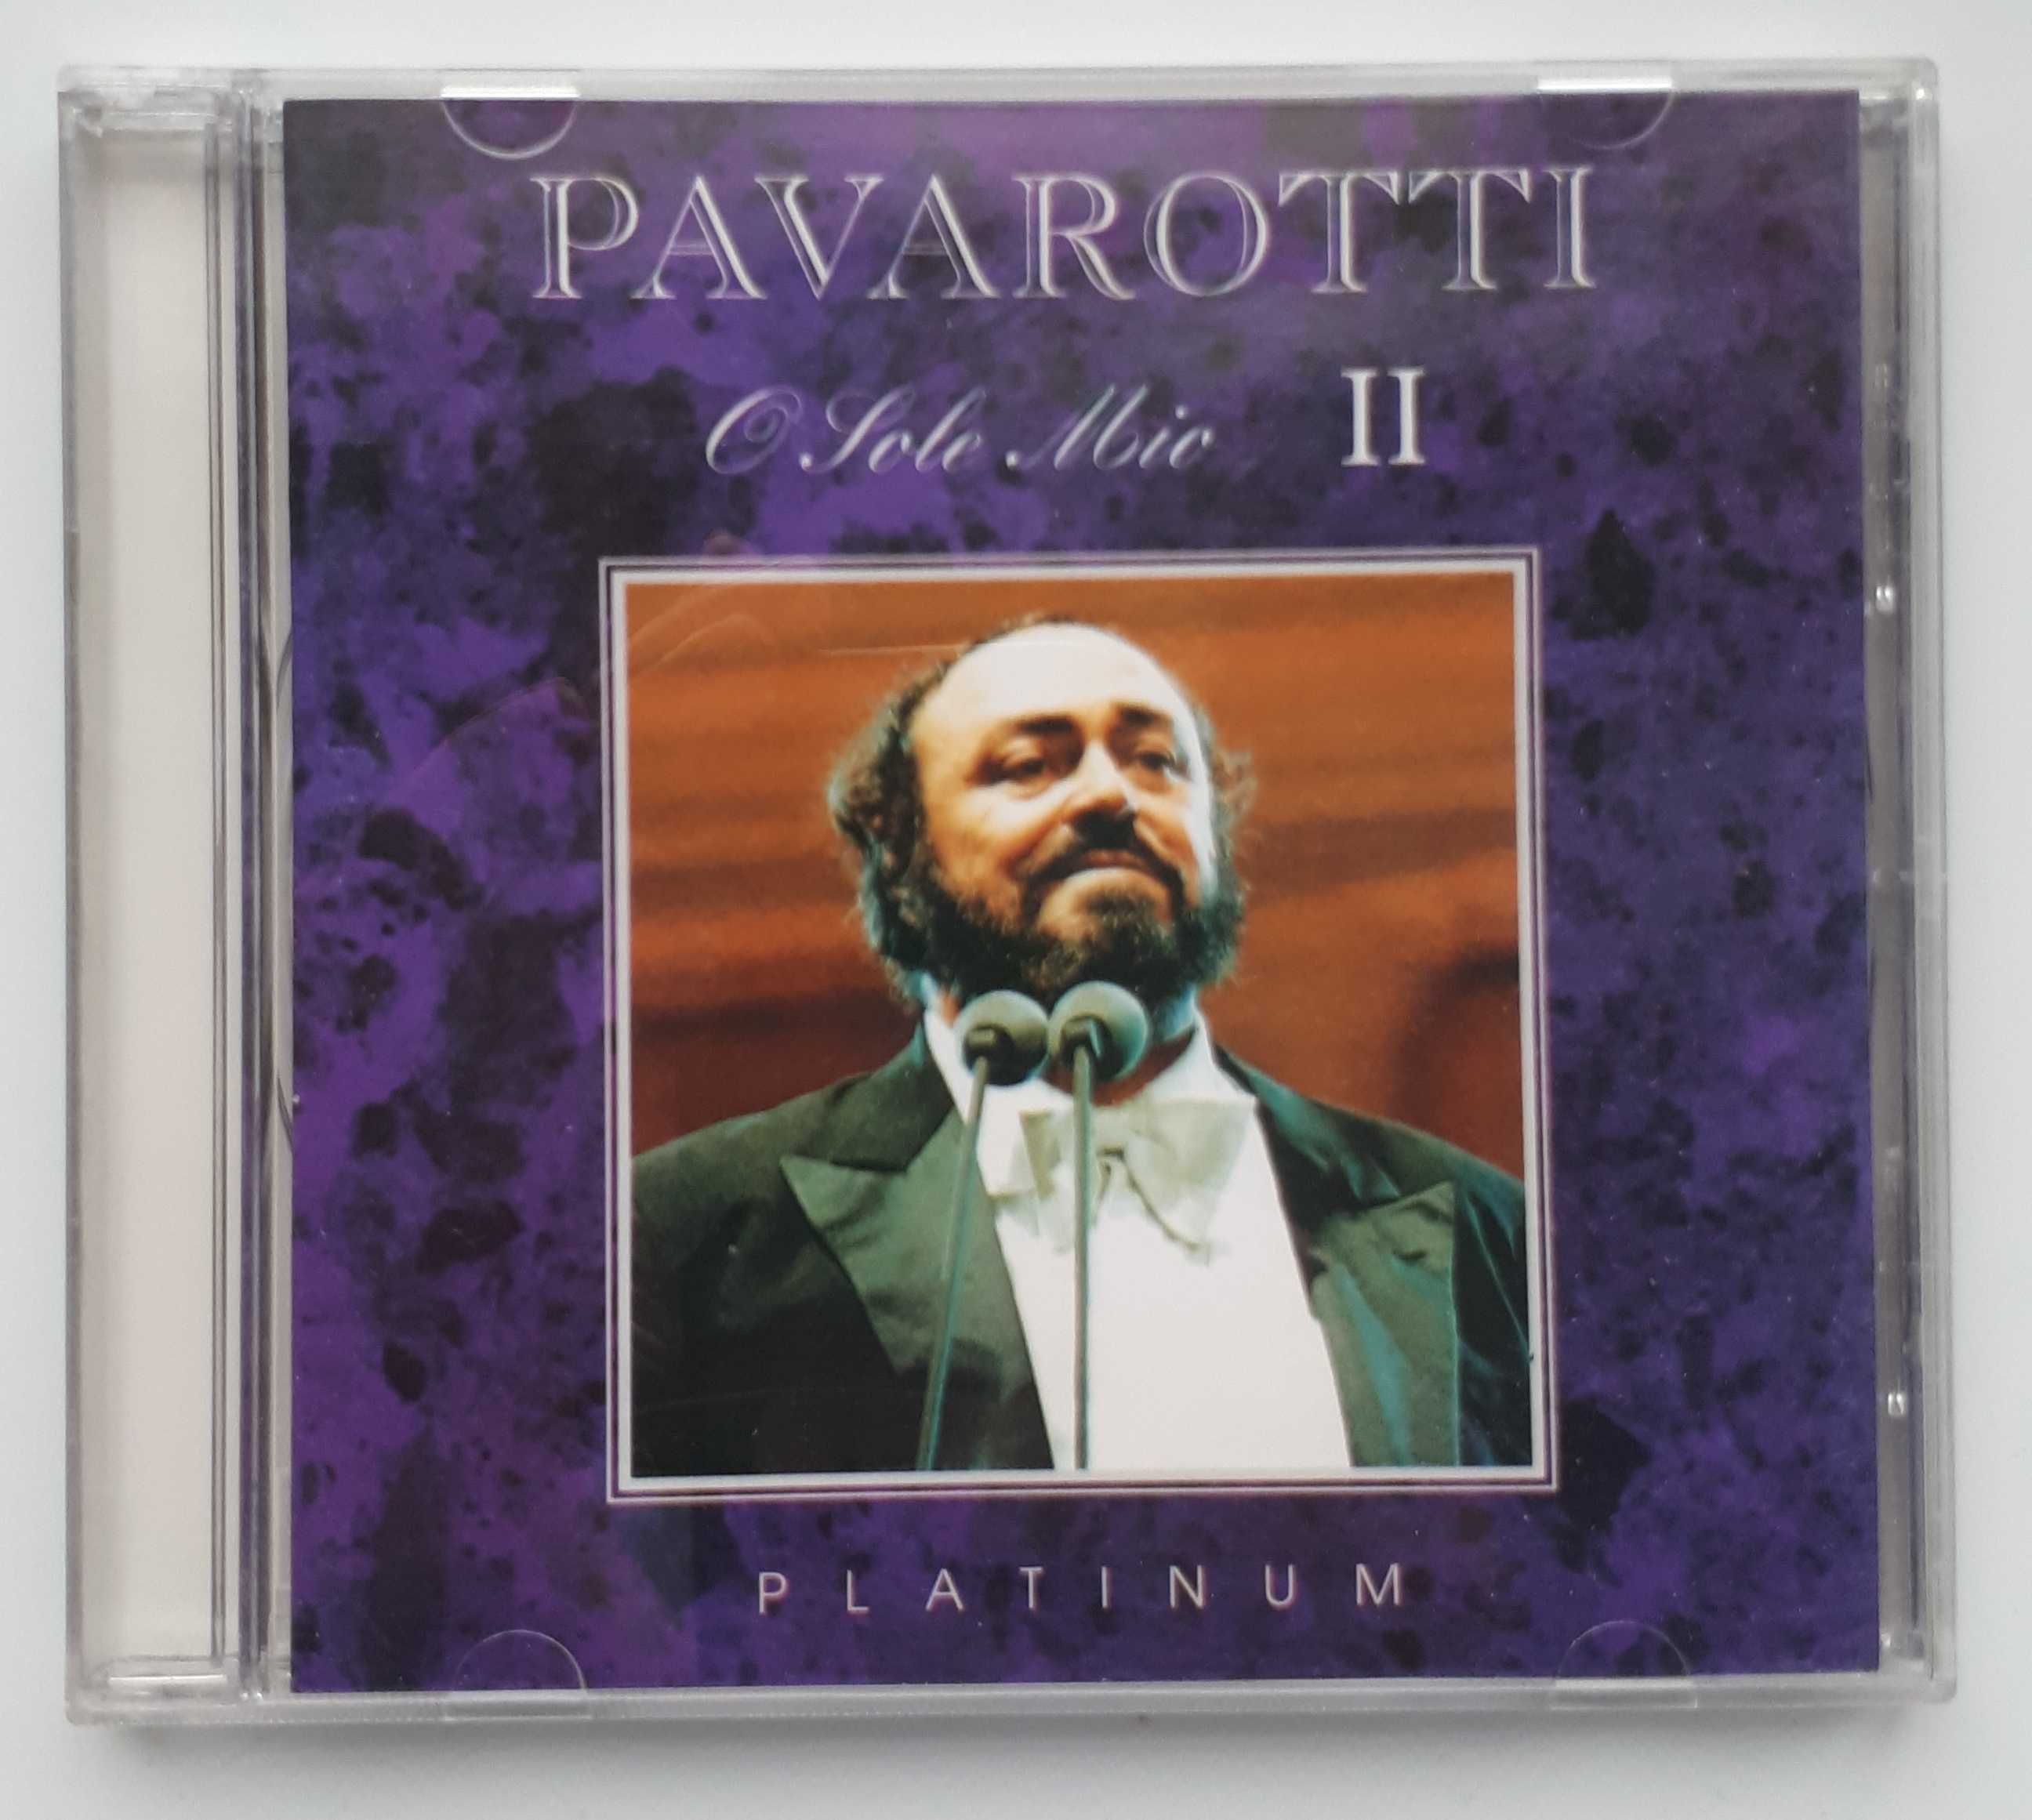 Pavarotti - PLATINUM. O sole mio II.